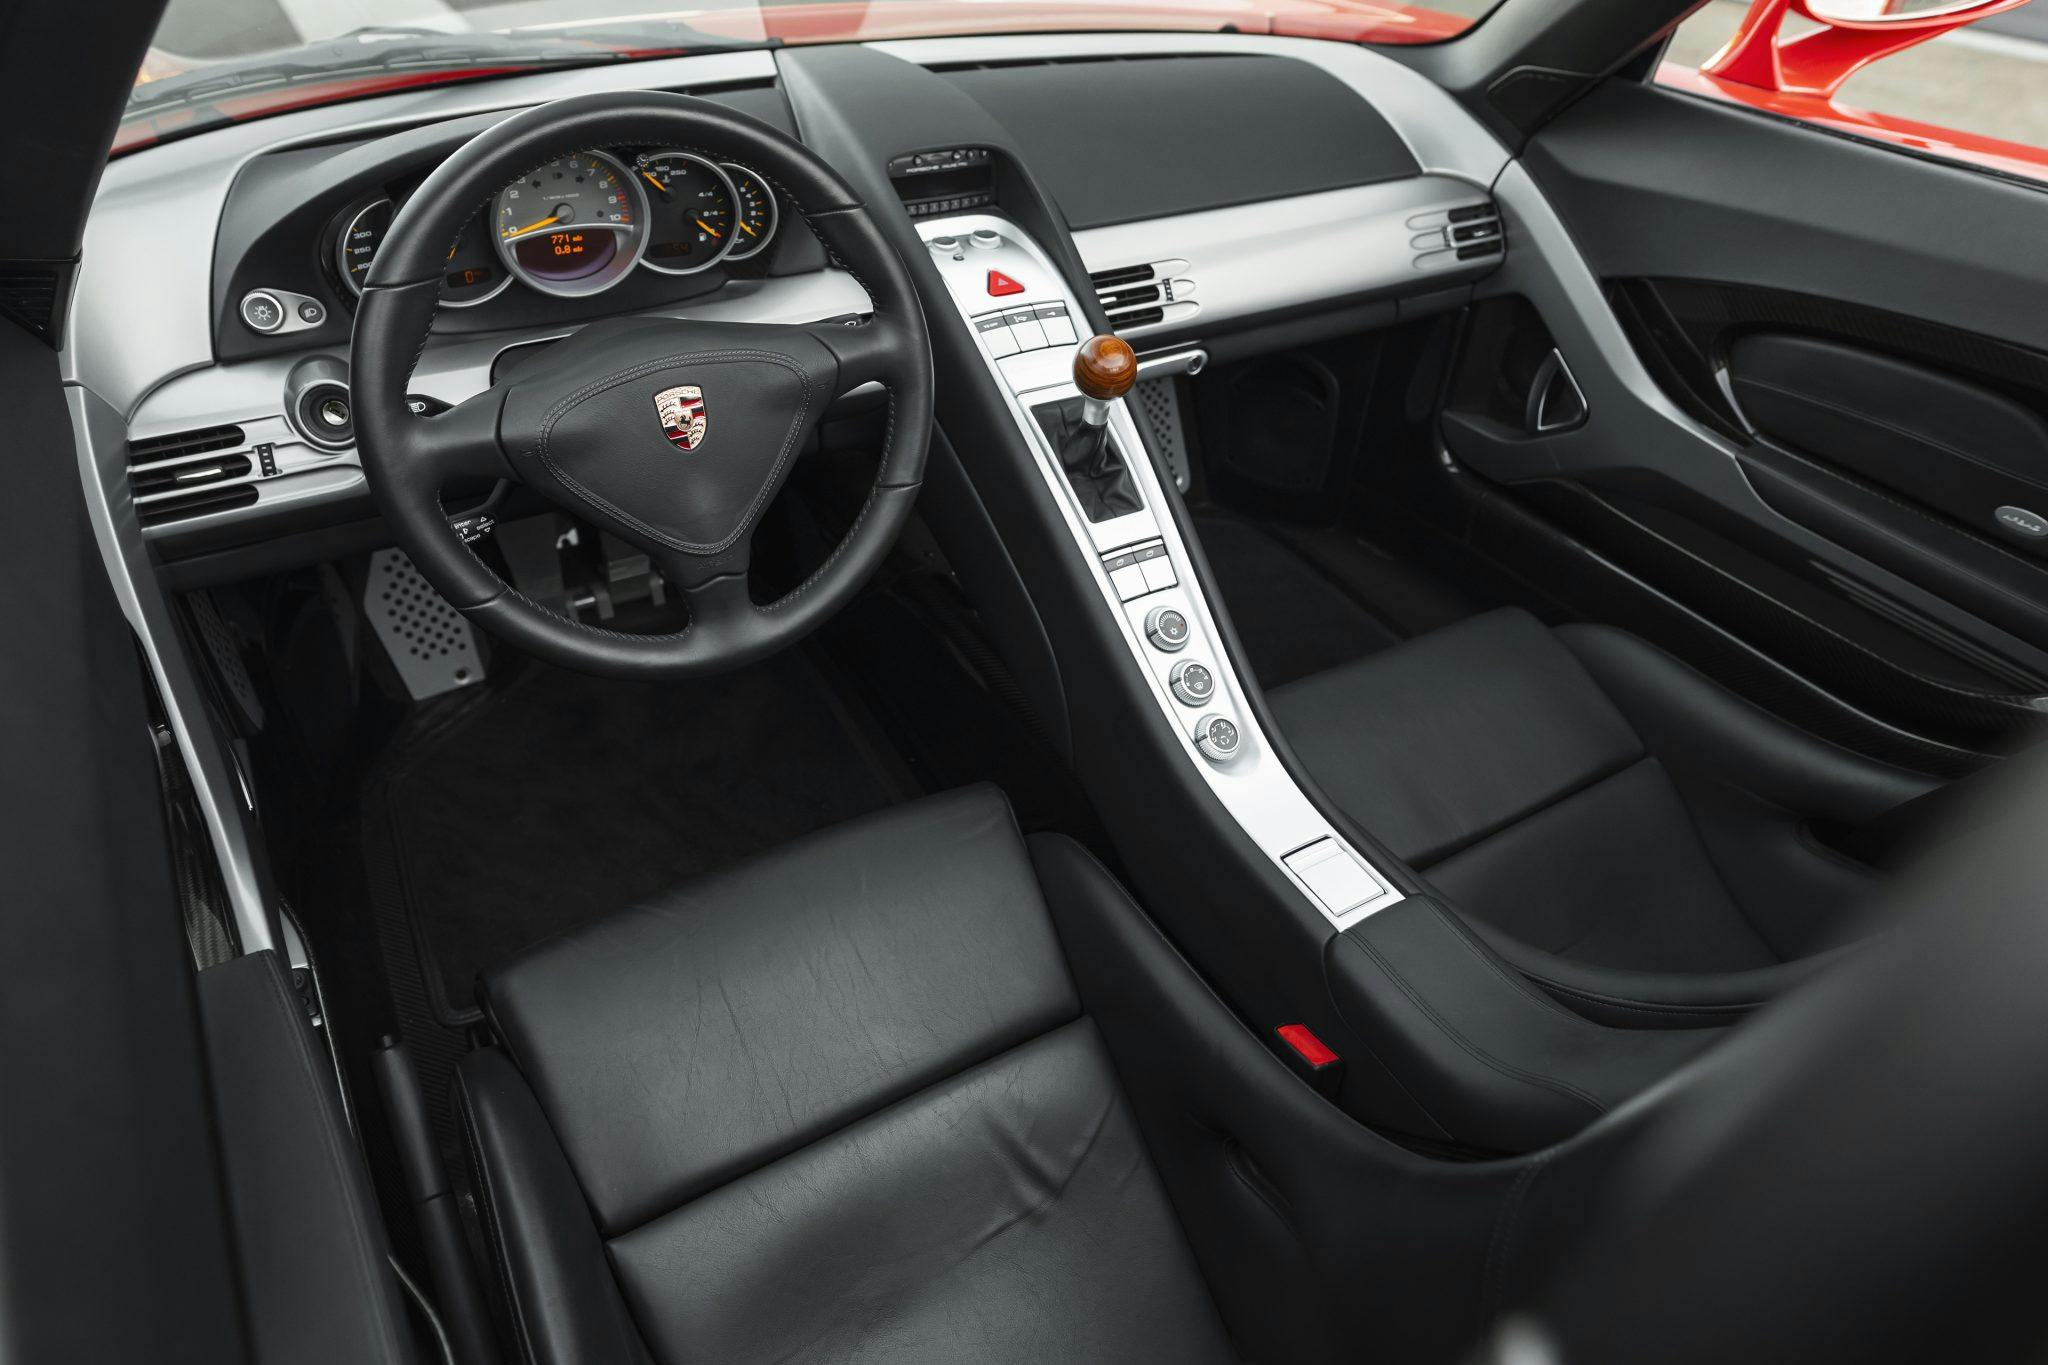 2005 Porsche Carrera GT manual transmission